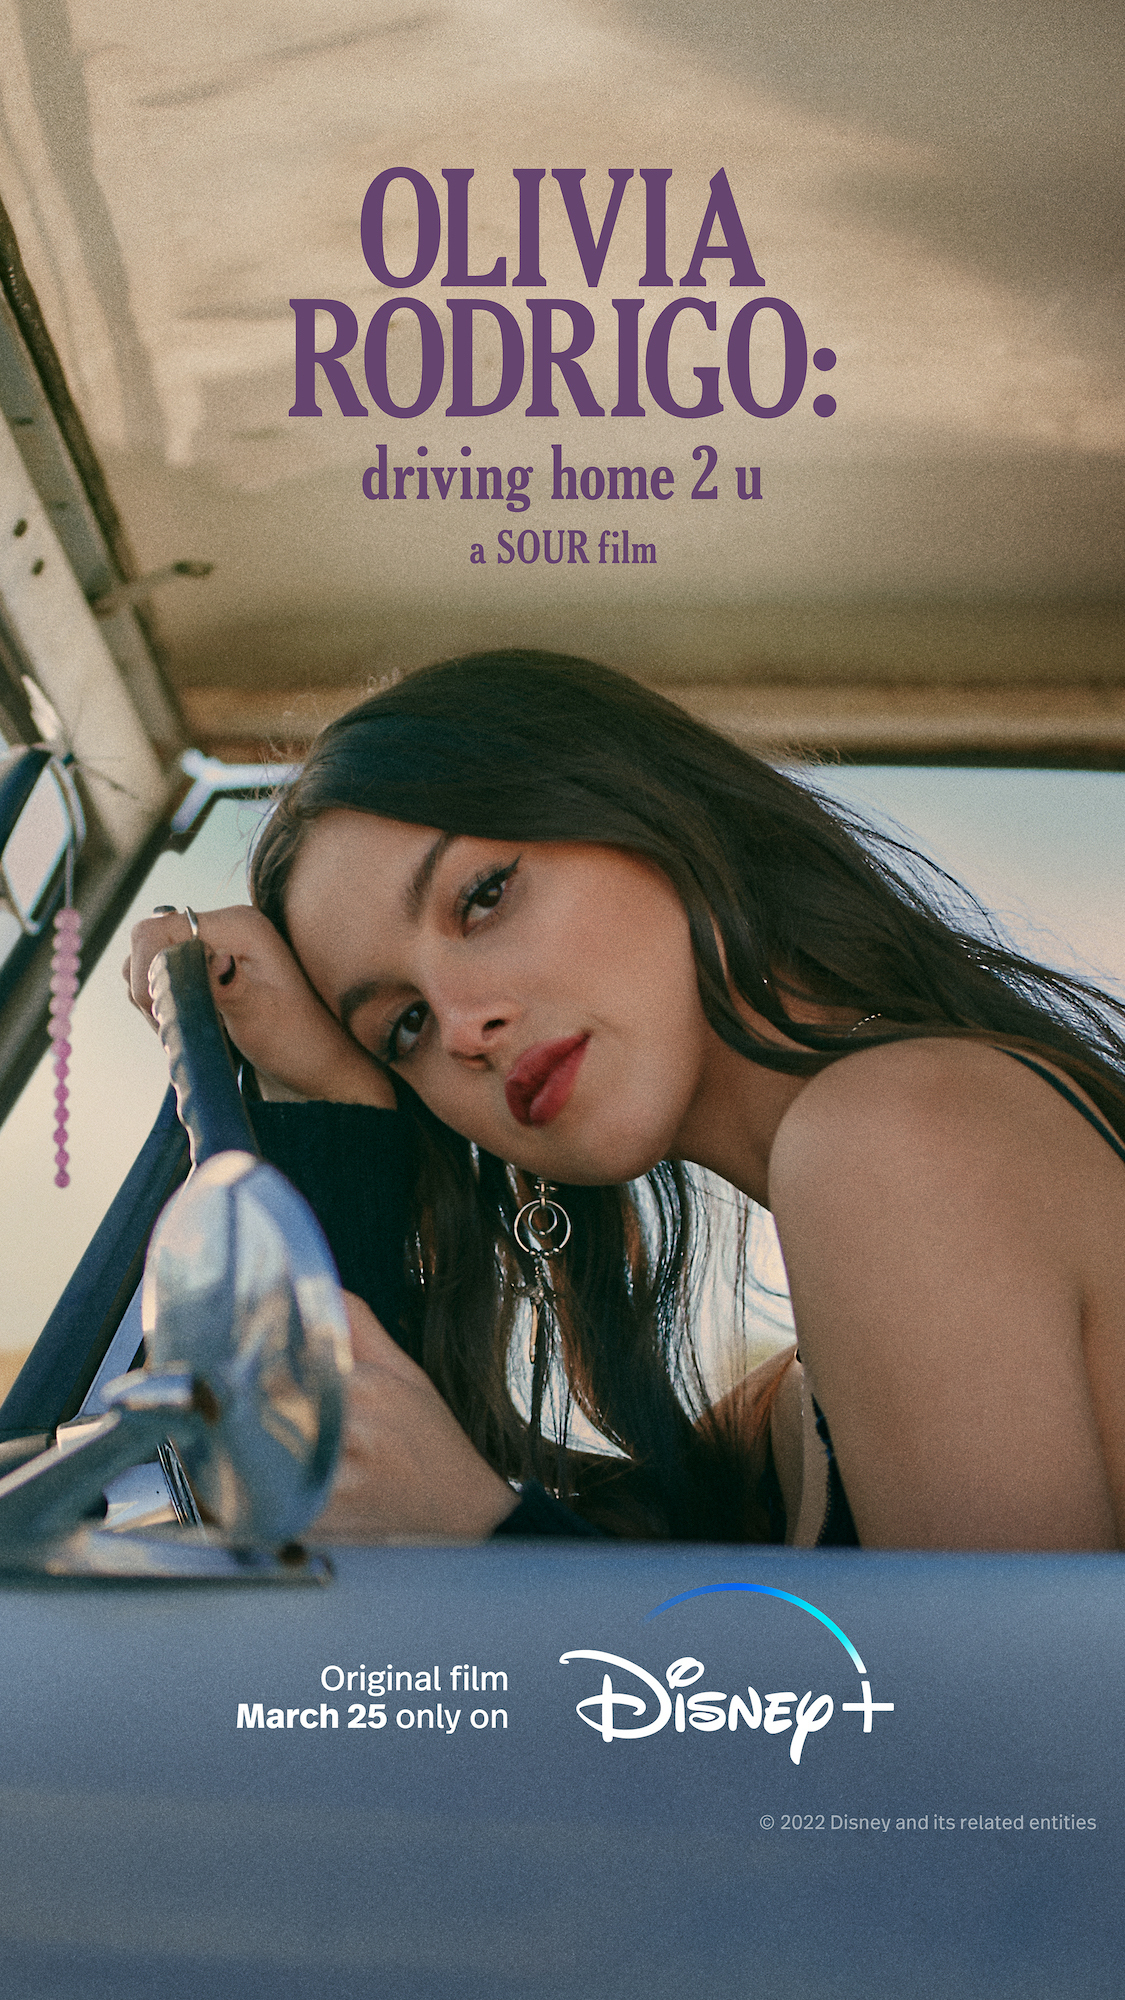 OLIVIA RODRIGO DRIVING HOME 2 U (2022)